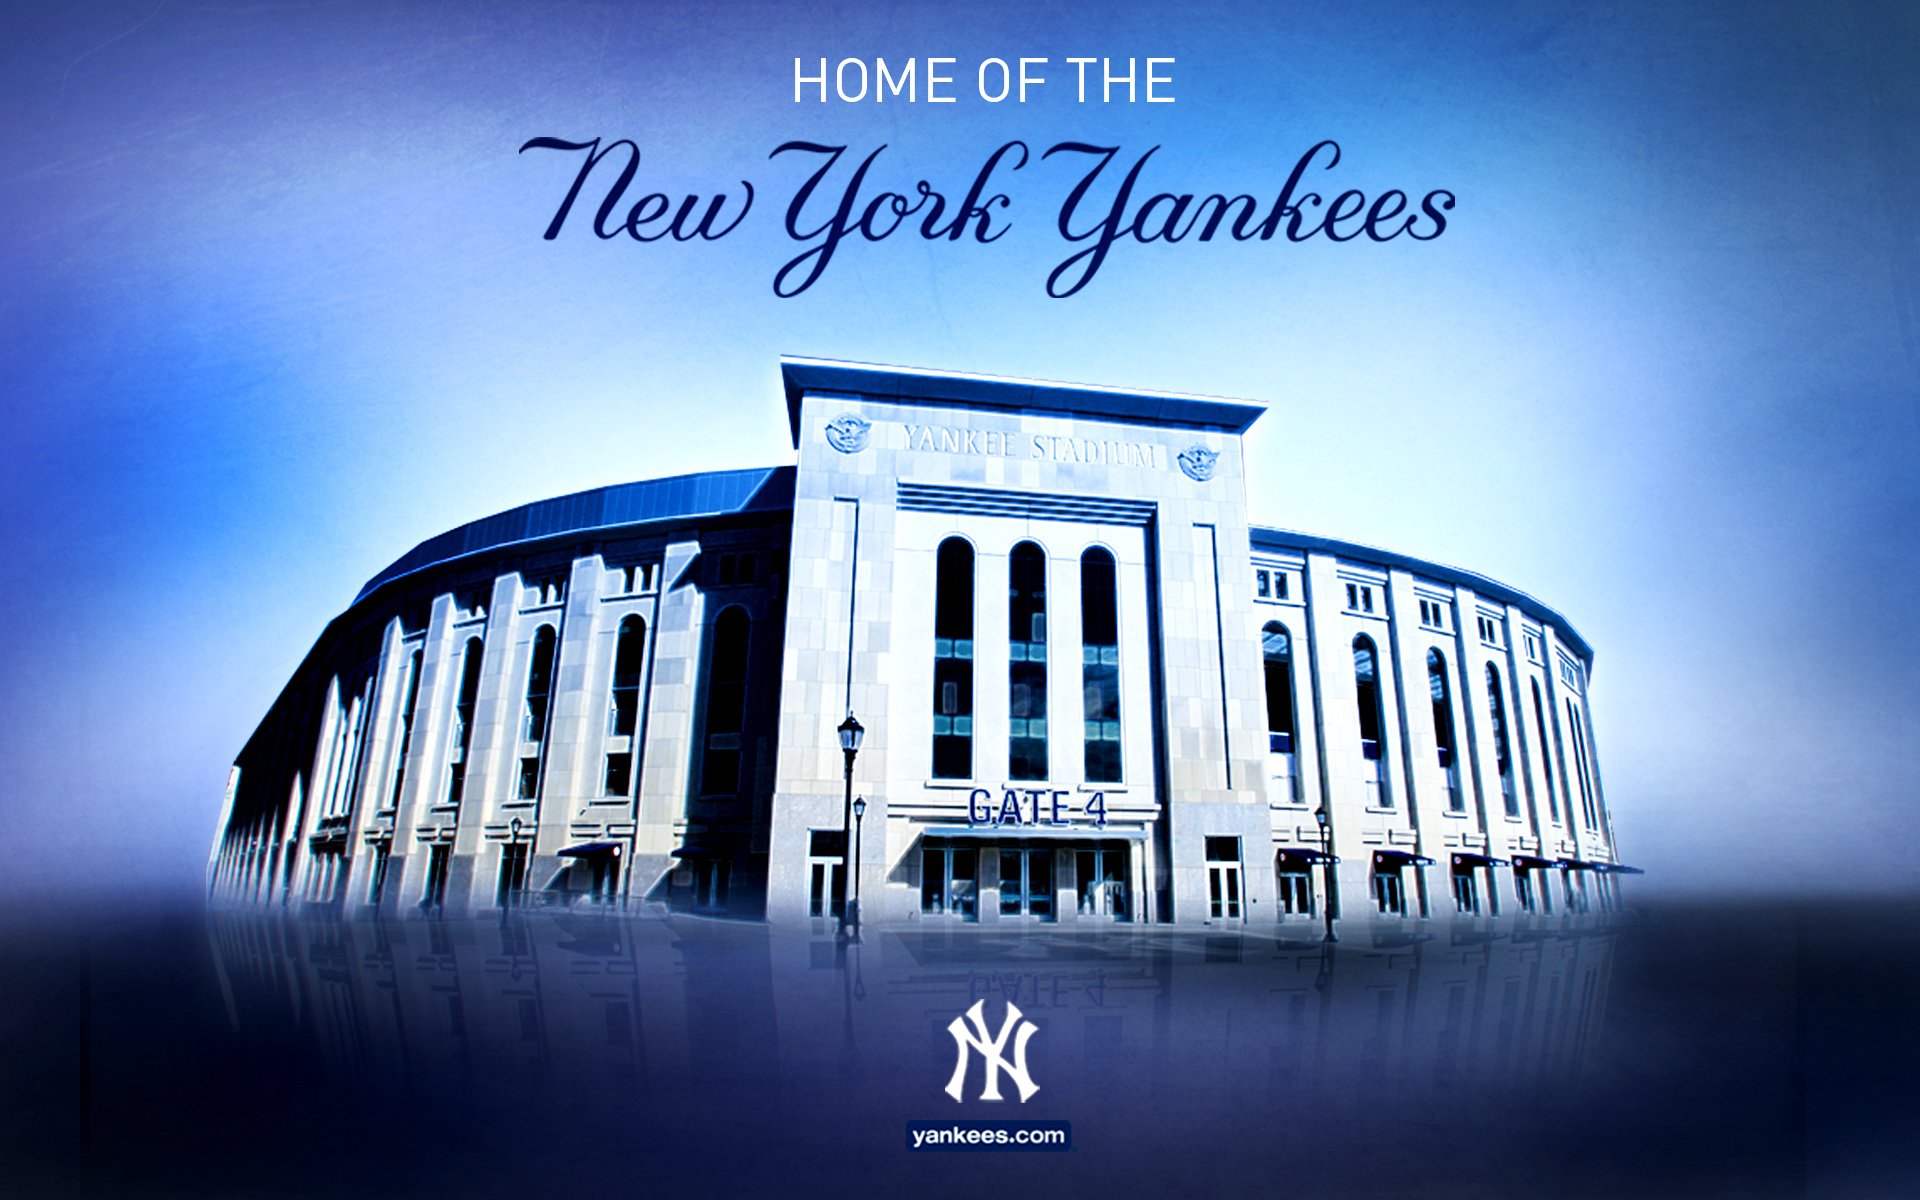 Fondos De Pantalla De New York Yankees   Wallpapers De New York